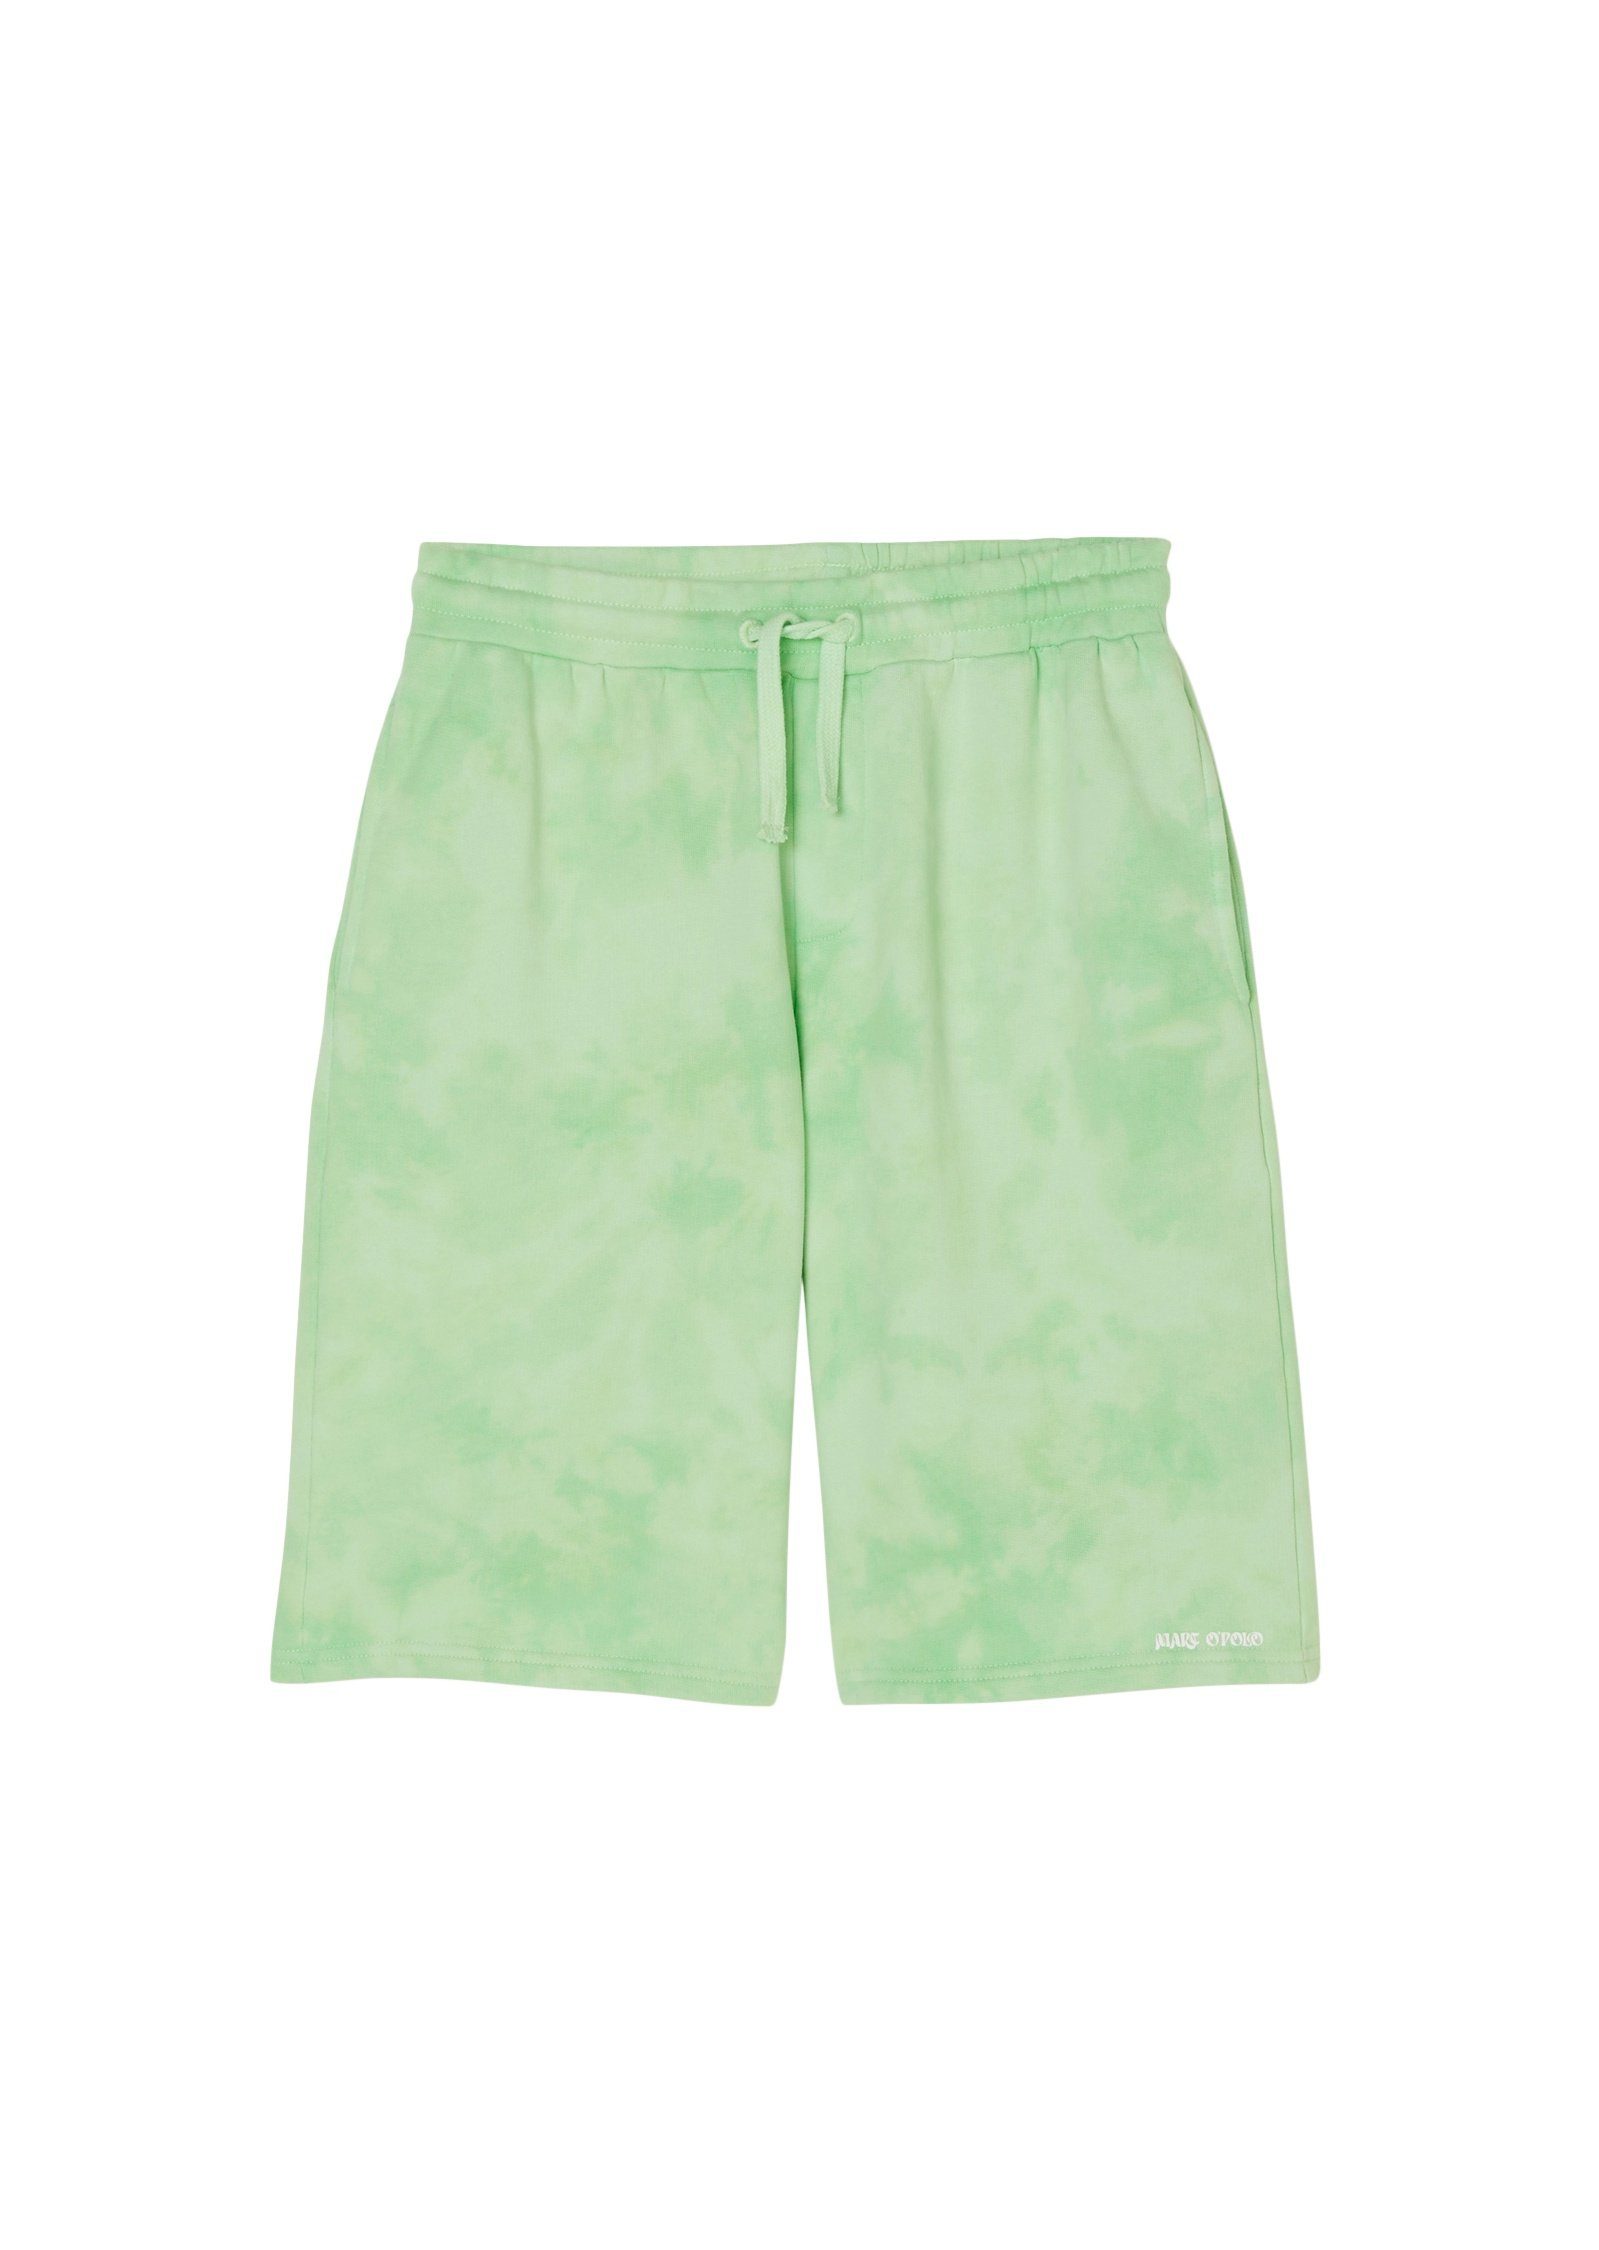 Marc O'Polo im Shorts grün Batik-Dessin